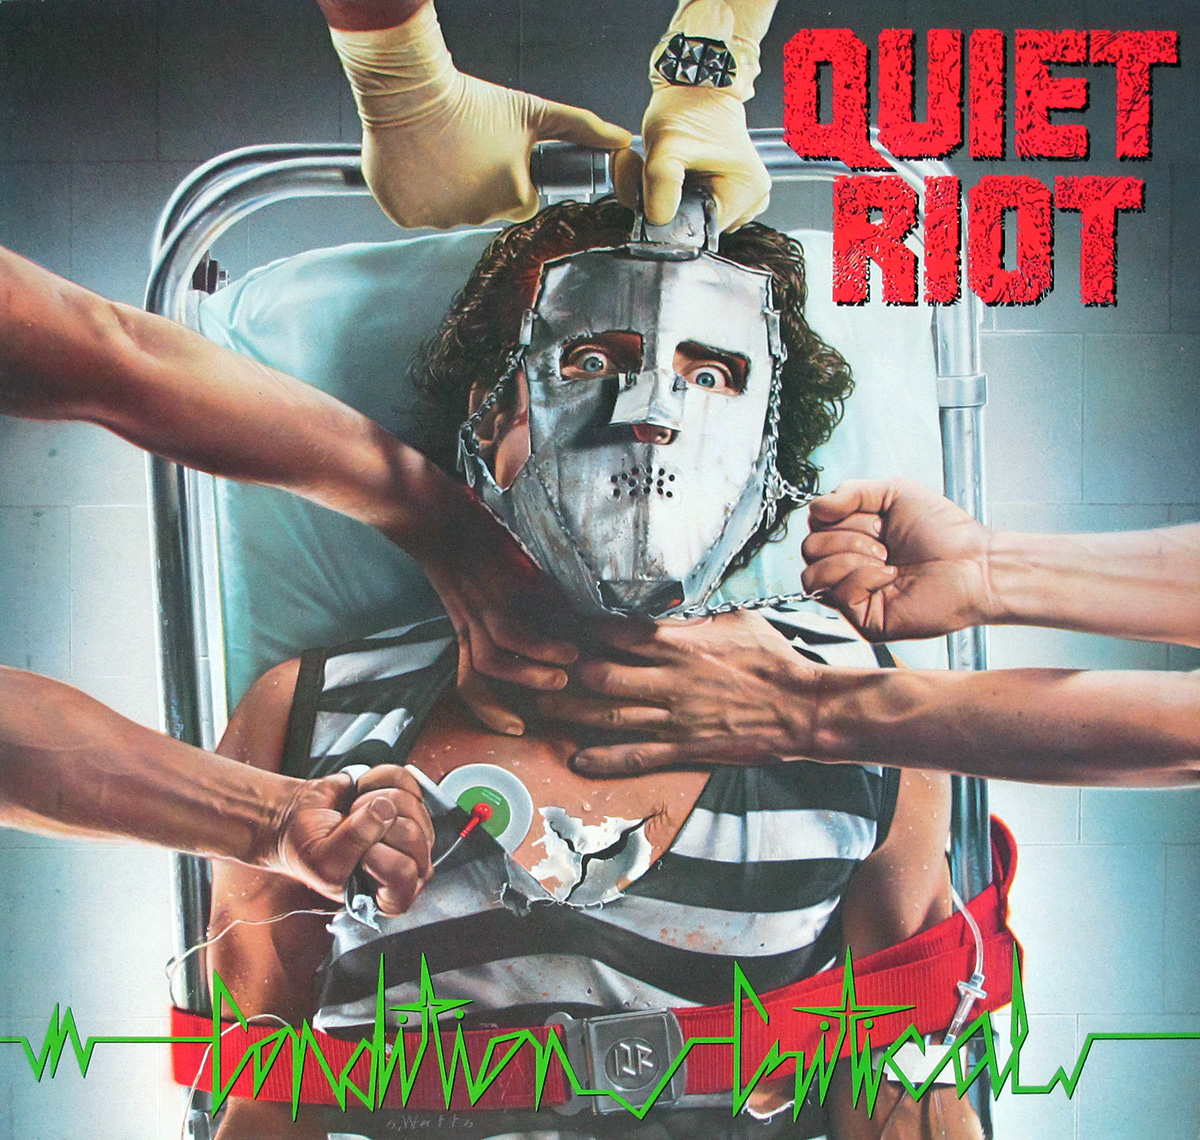 QUIET RIOT - Conditional Critical (Blue Record Label)  album front cover vinyl record